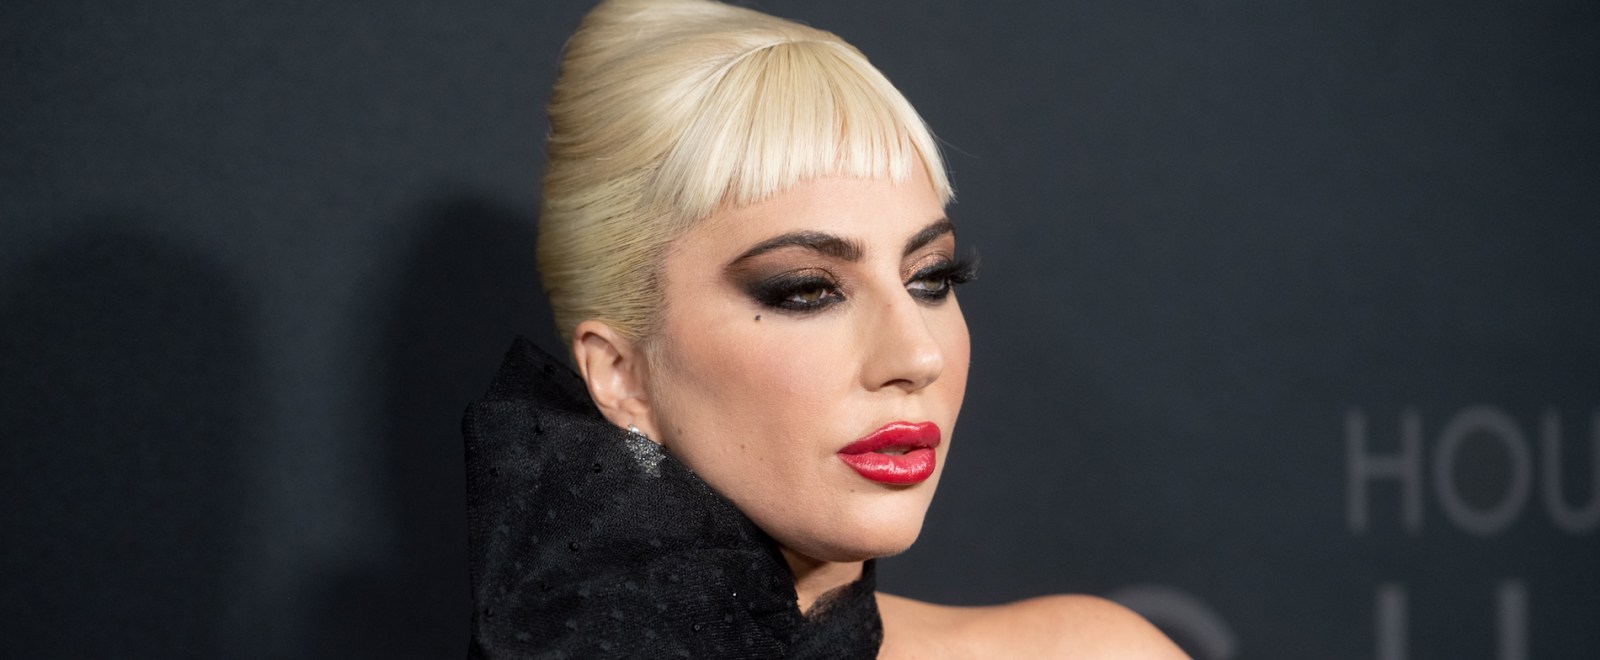 Lady Gaga House Of Gucci Premiere 2021